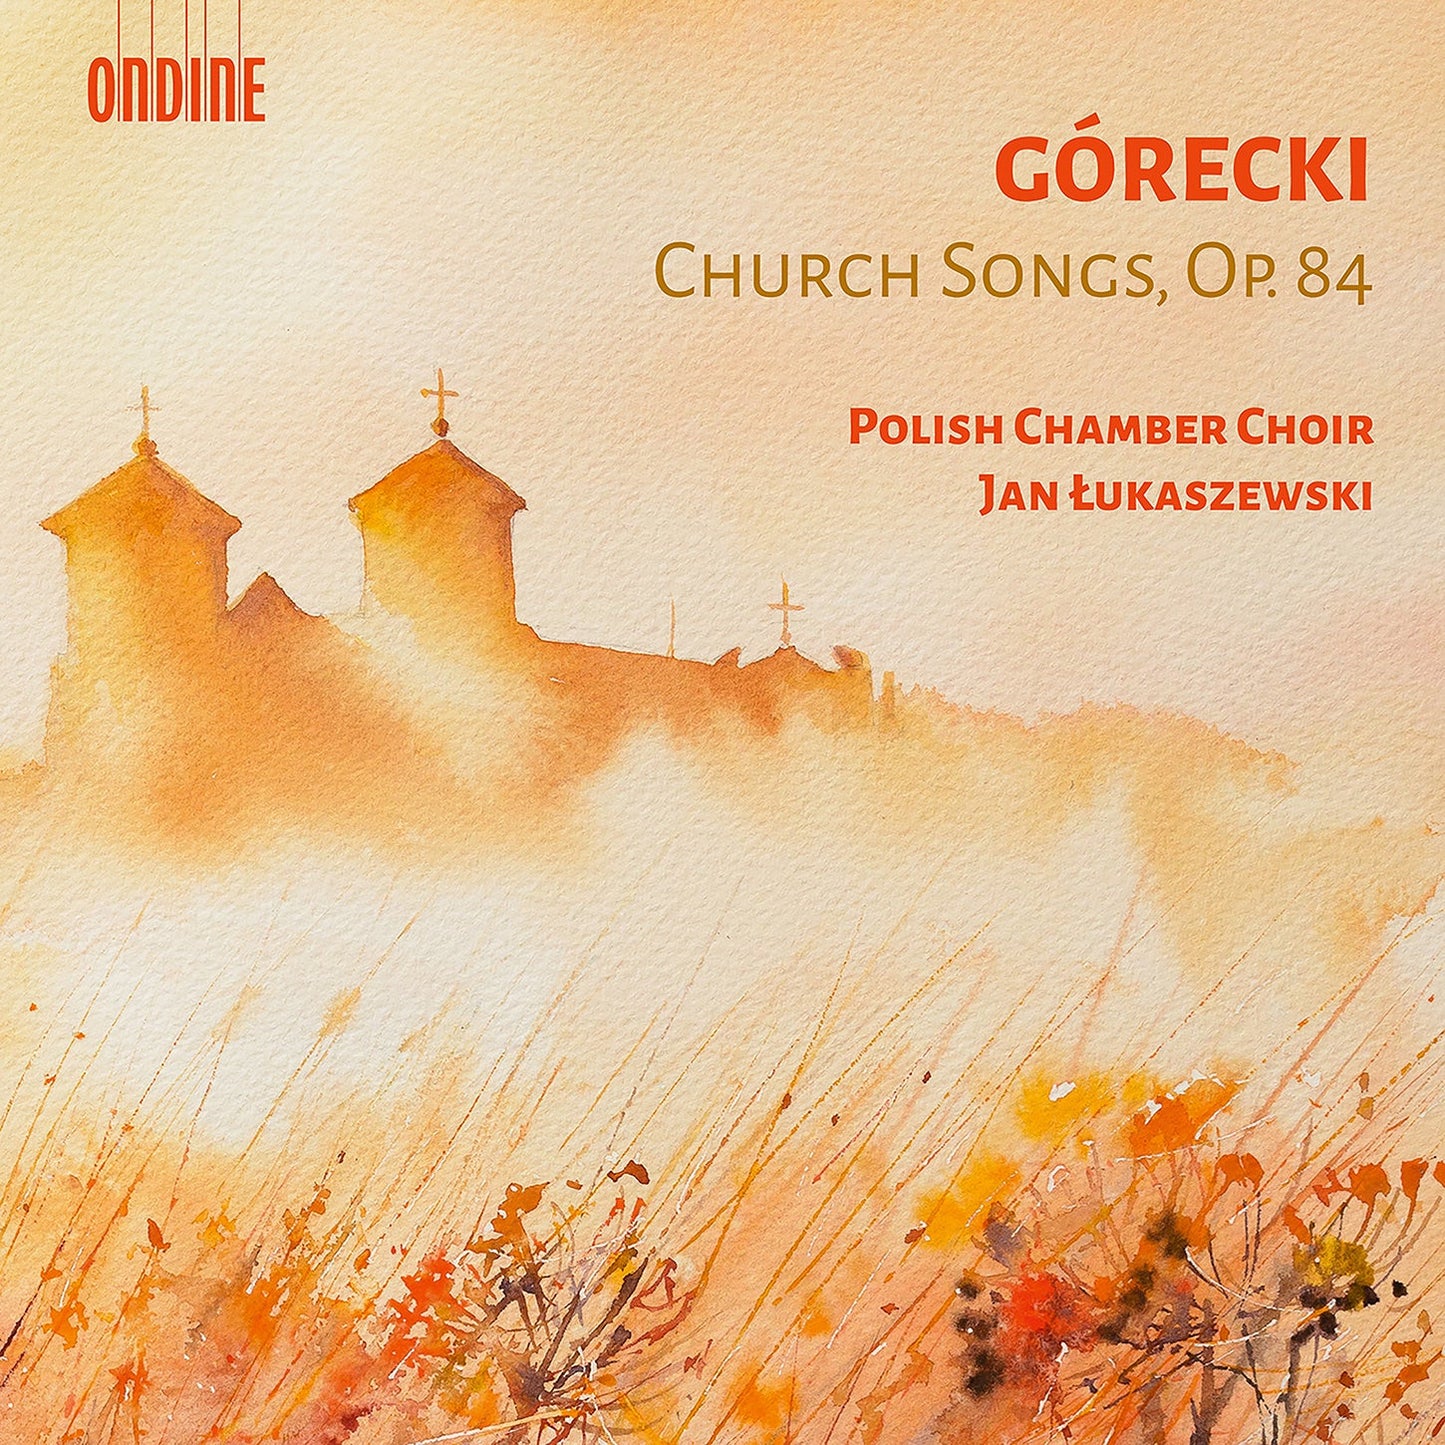 Gorecki: Church Songs, Op. 84